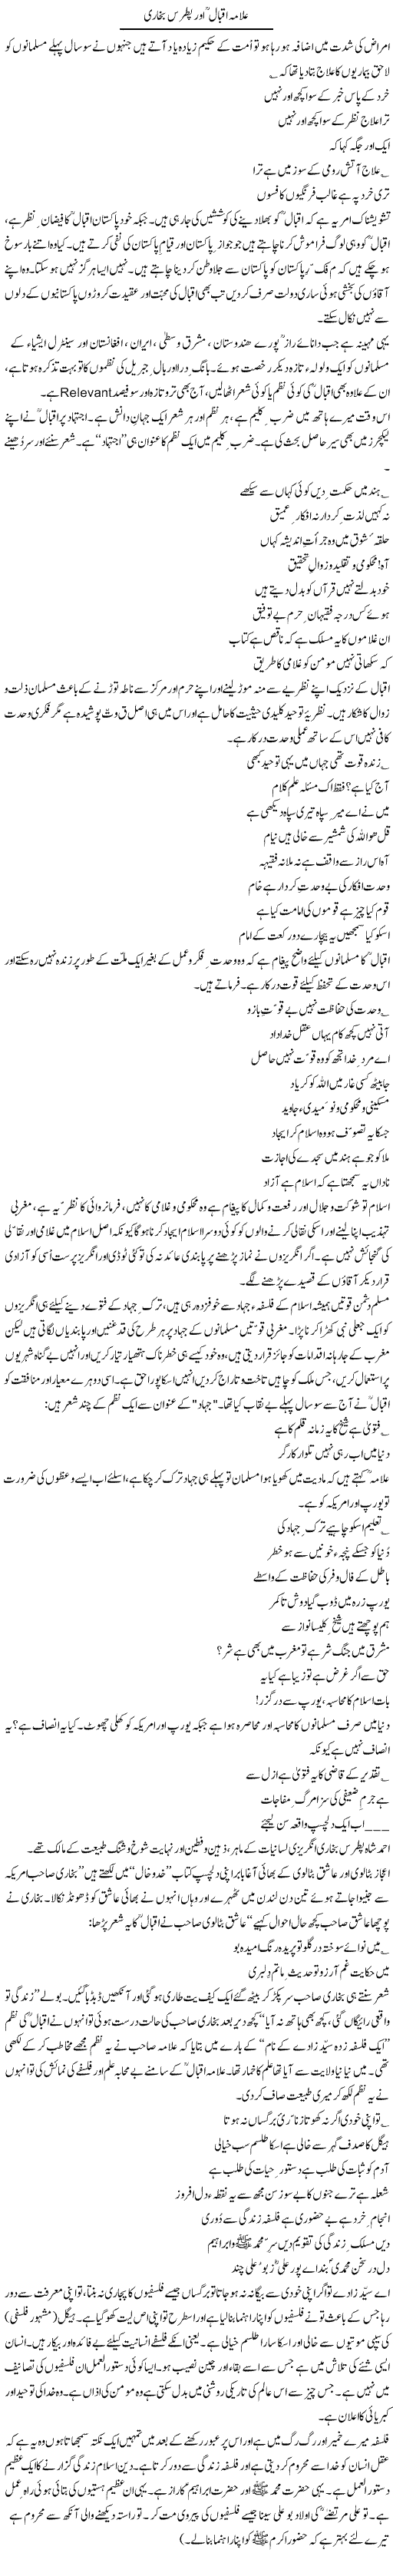 Allama Iqbal Aor Pitras Bukhari | Zulfiqar Ahmed Cheema | Daily Urdu Columns